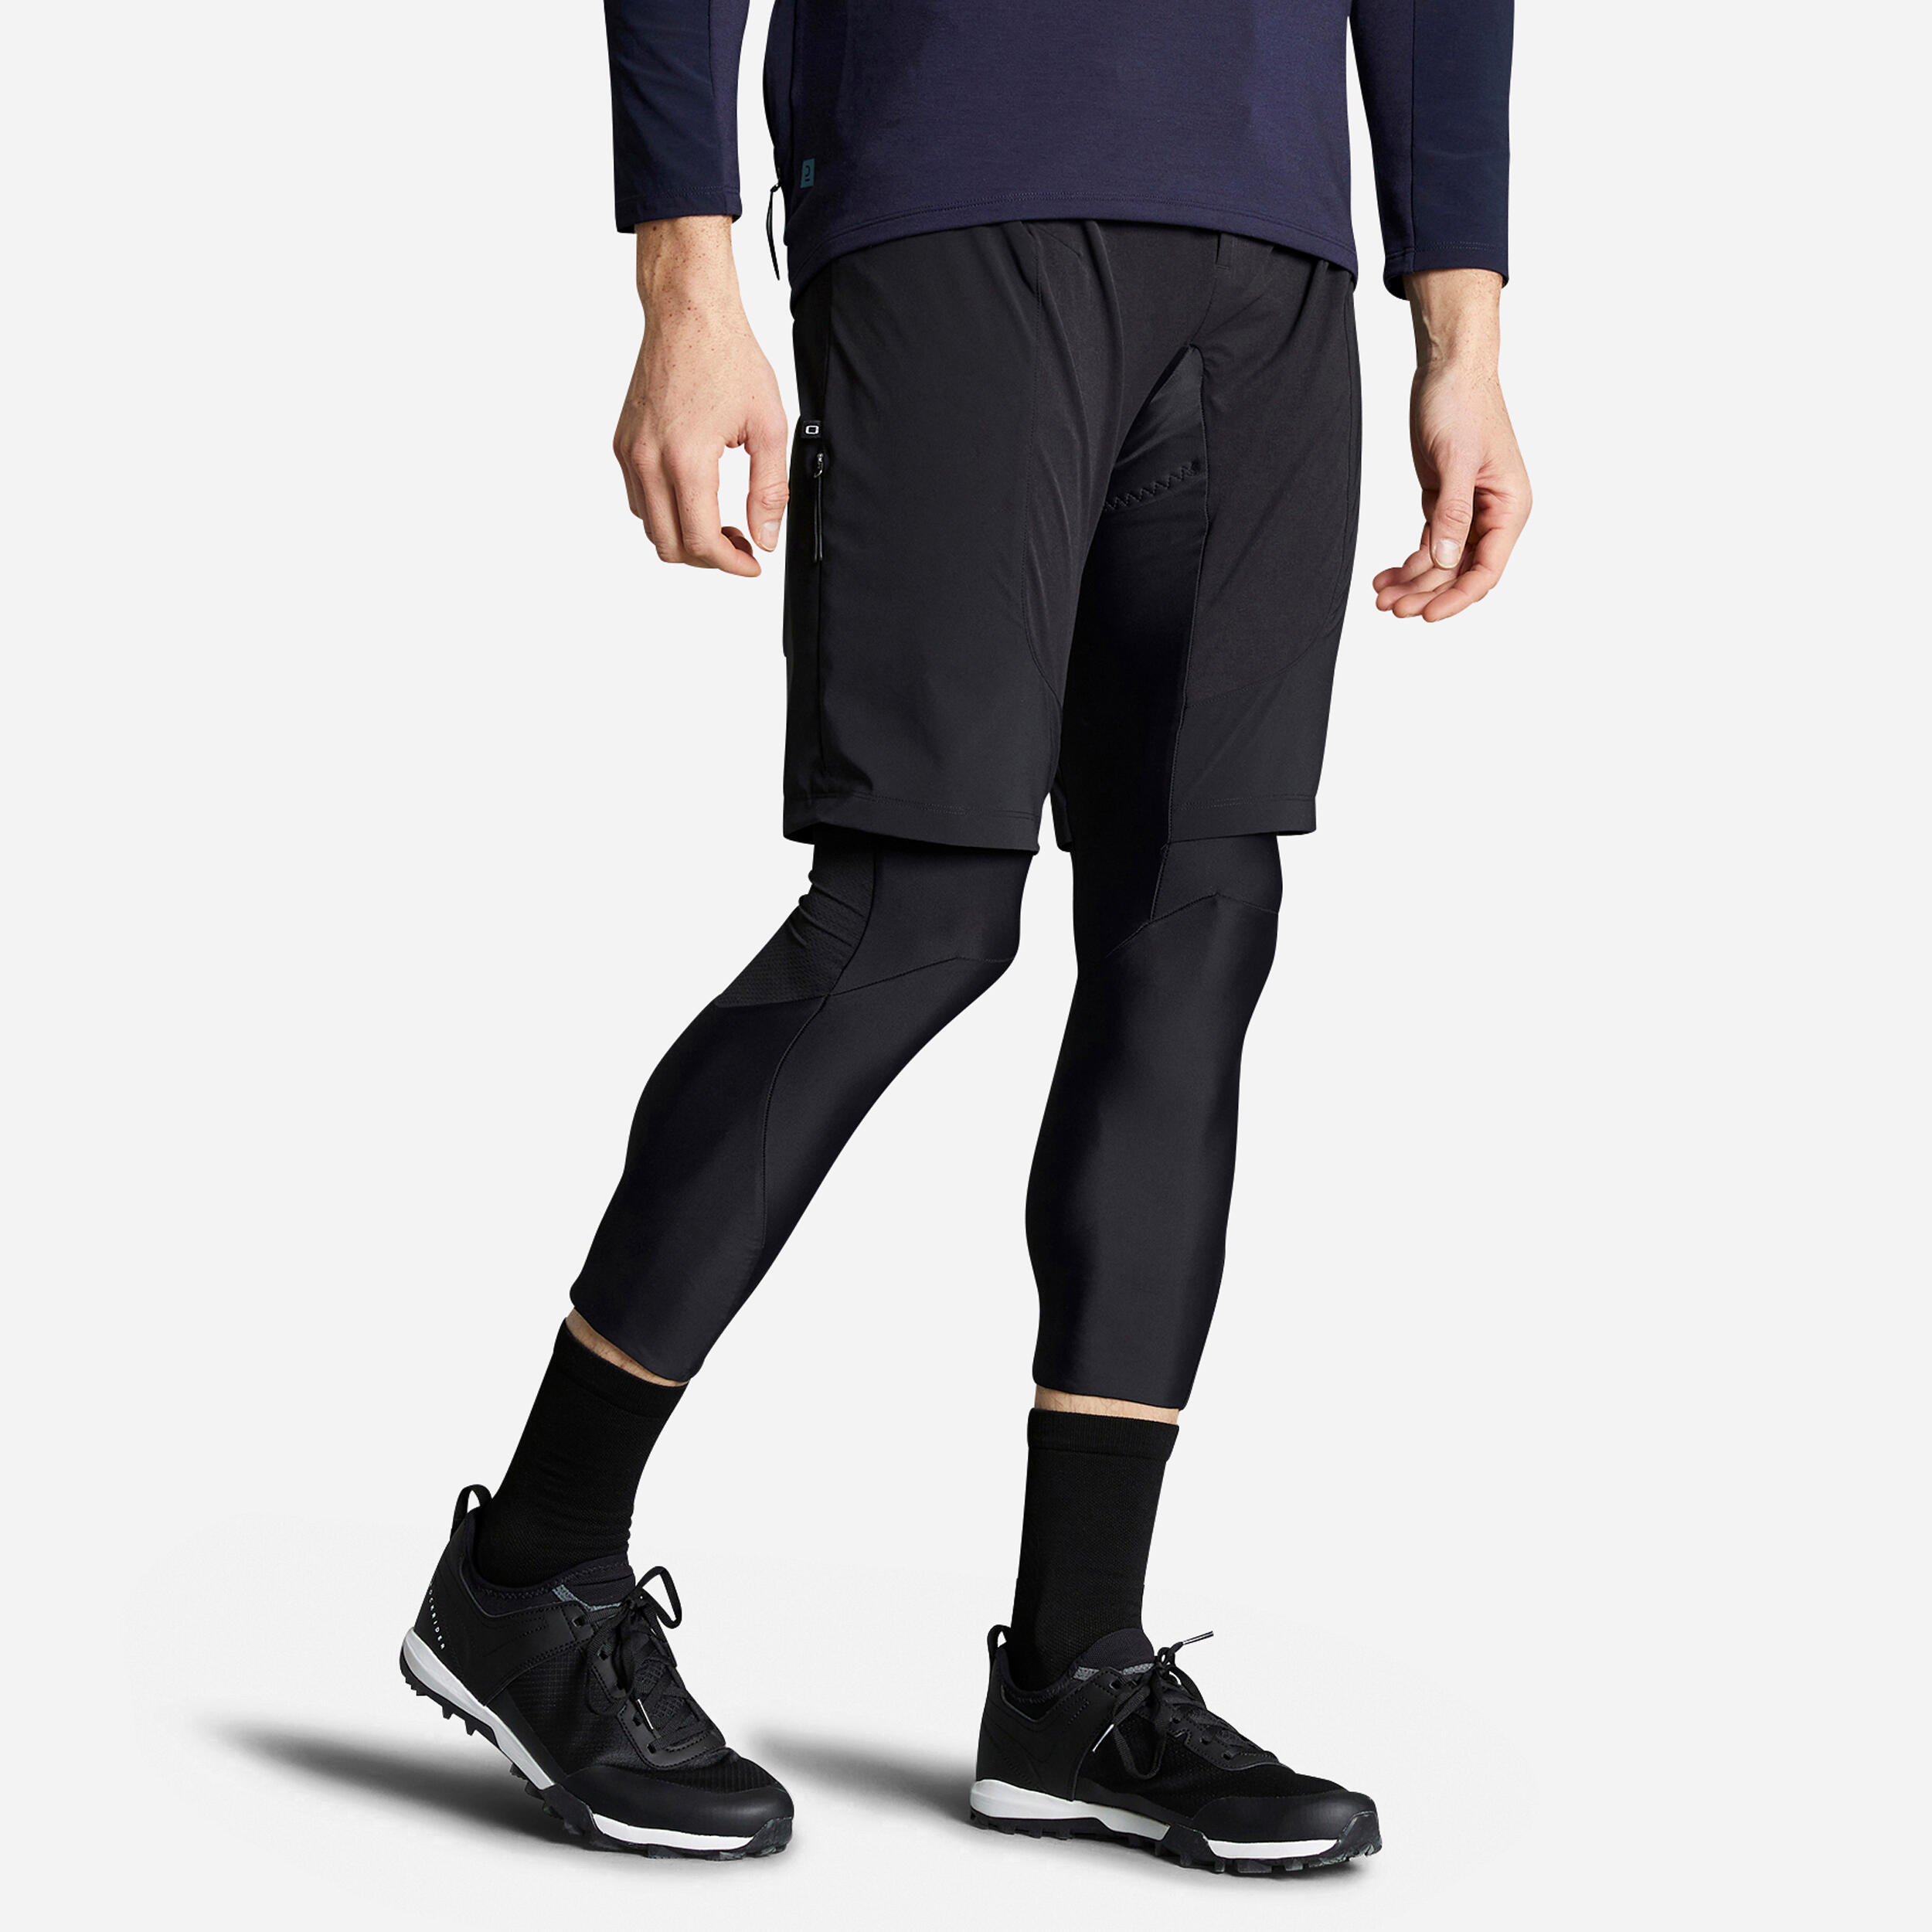 Men's 2-in-1 Mountain Bike Combo Shorts/Undershorts Expl 500 - Black 1/10